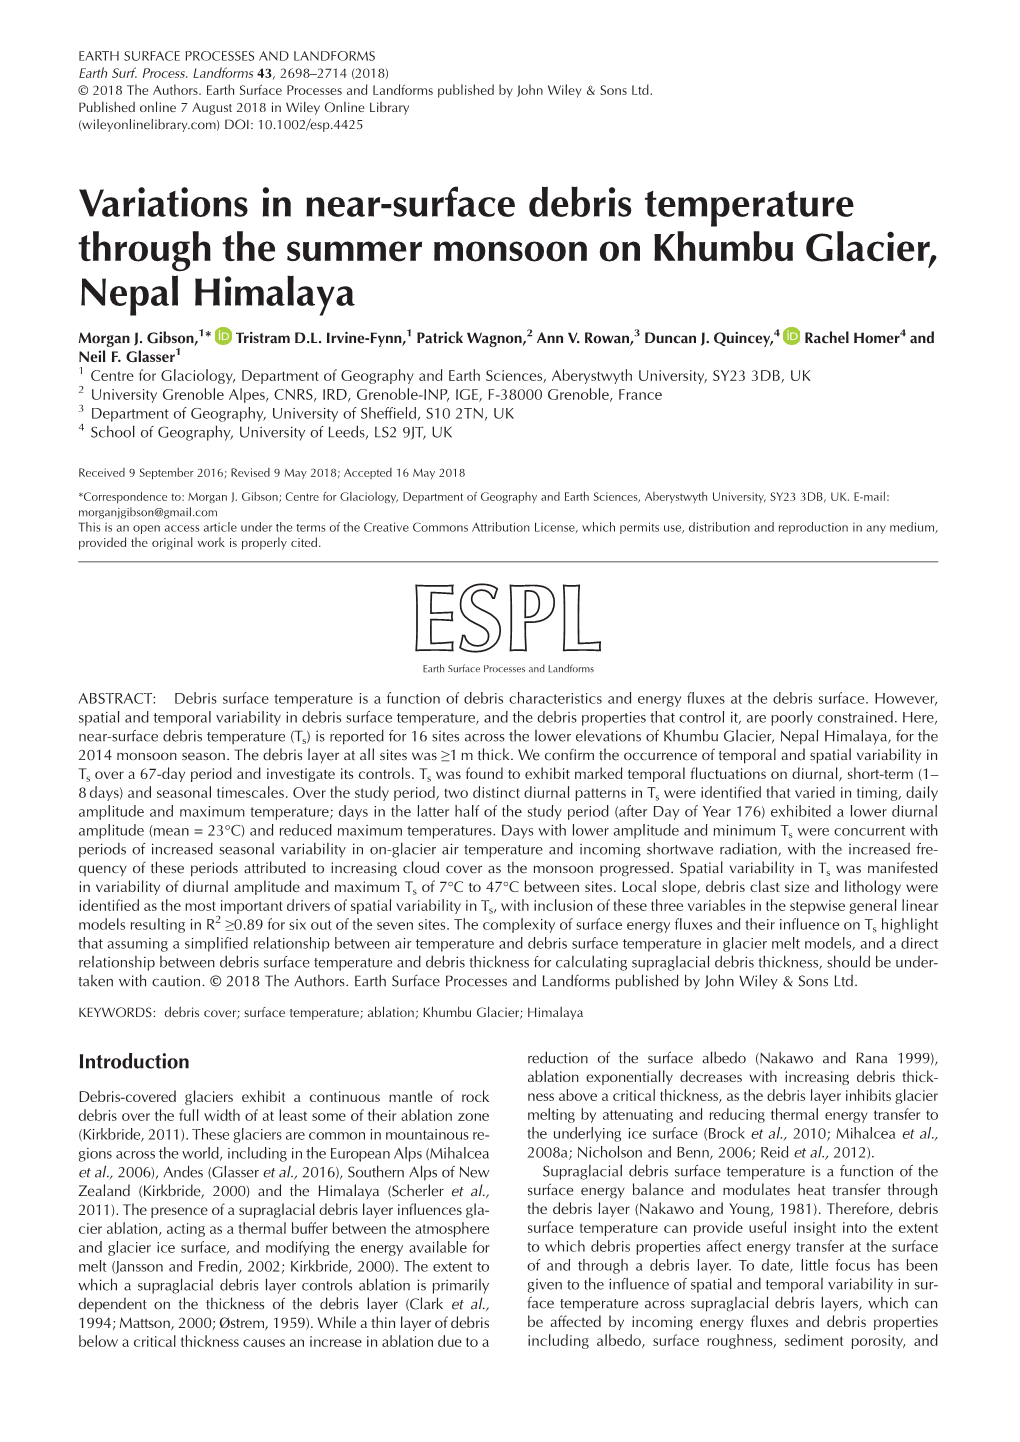 Variations in Near-Surface Debris Temperature Through the Summer Monsoon on Khumbu Glacier, Nepal Himalaya